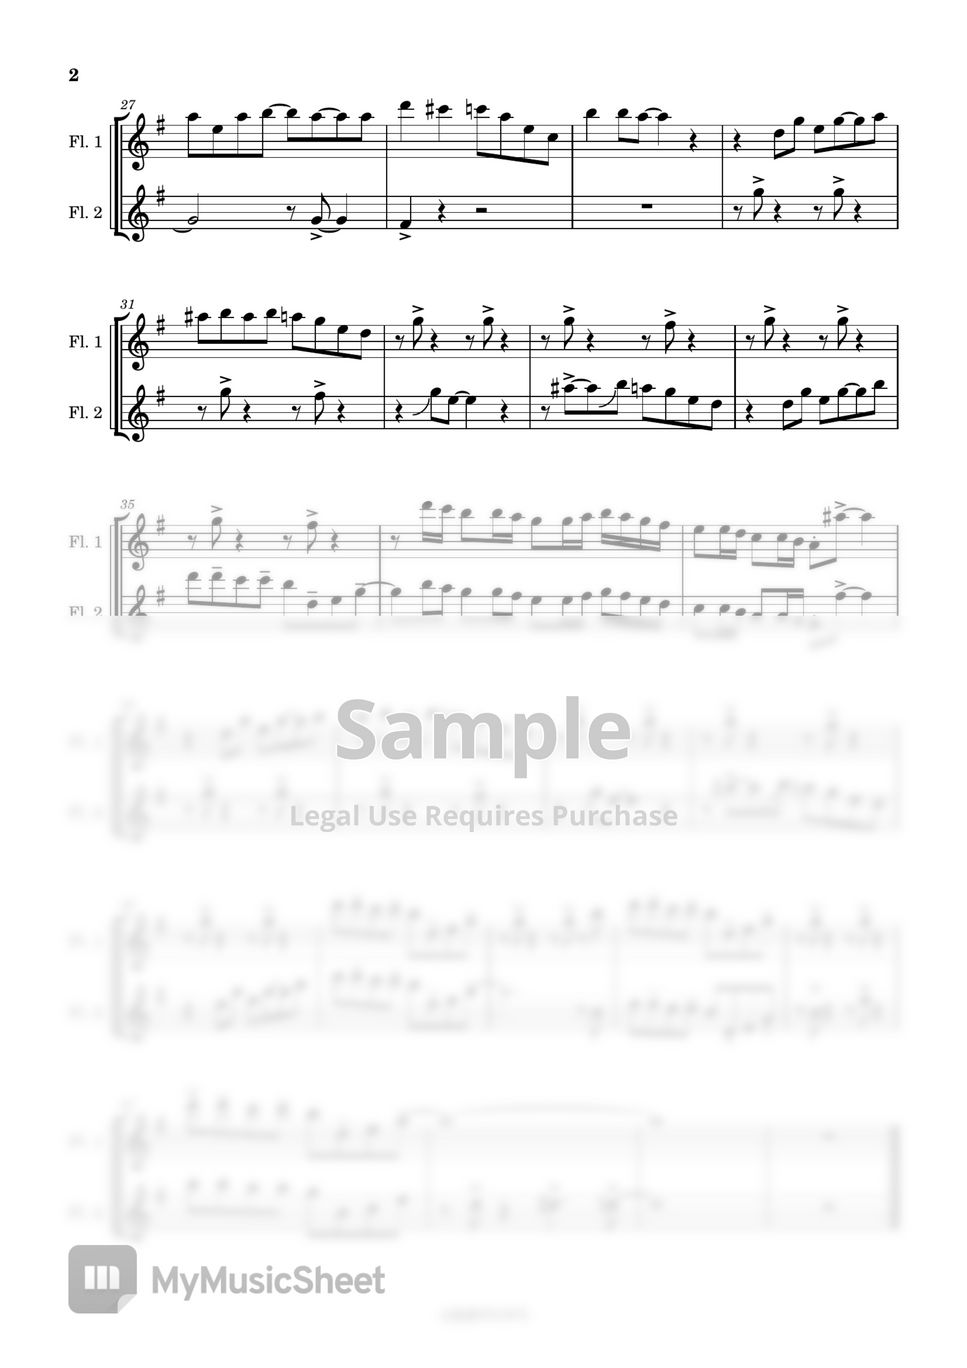 eartha kitt - Santa baby (Two flutes/반주 MR/피아노반주) by simpleflutemusic